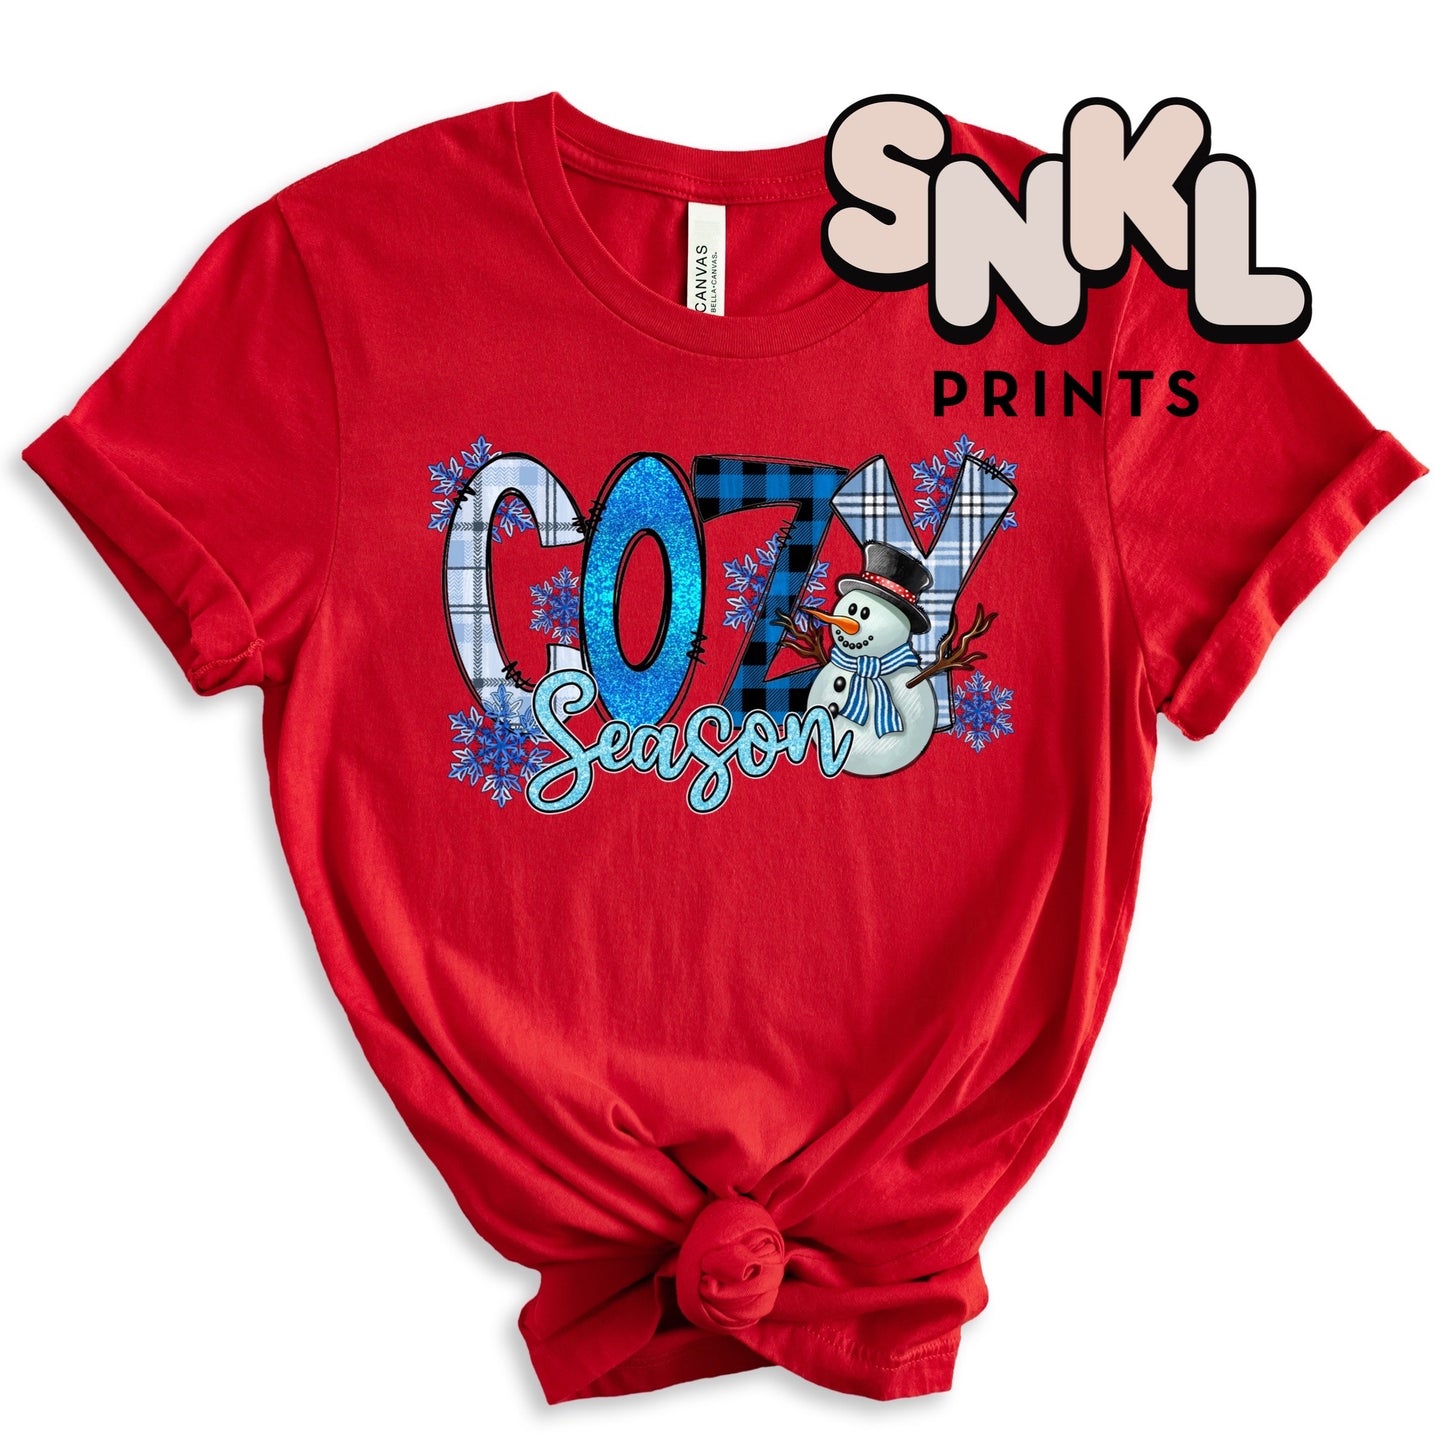 Cozy Season Snowman | Adult - SNKL Prints